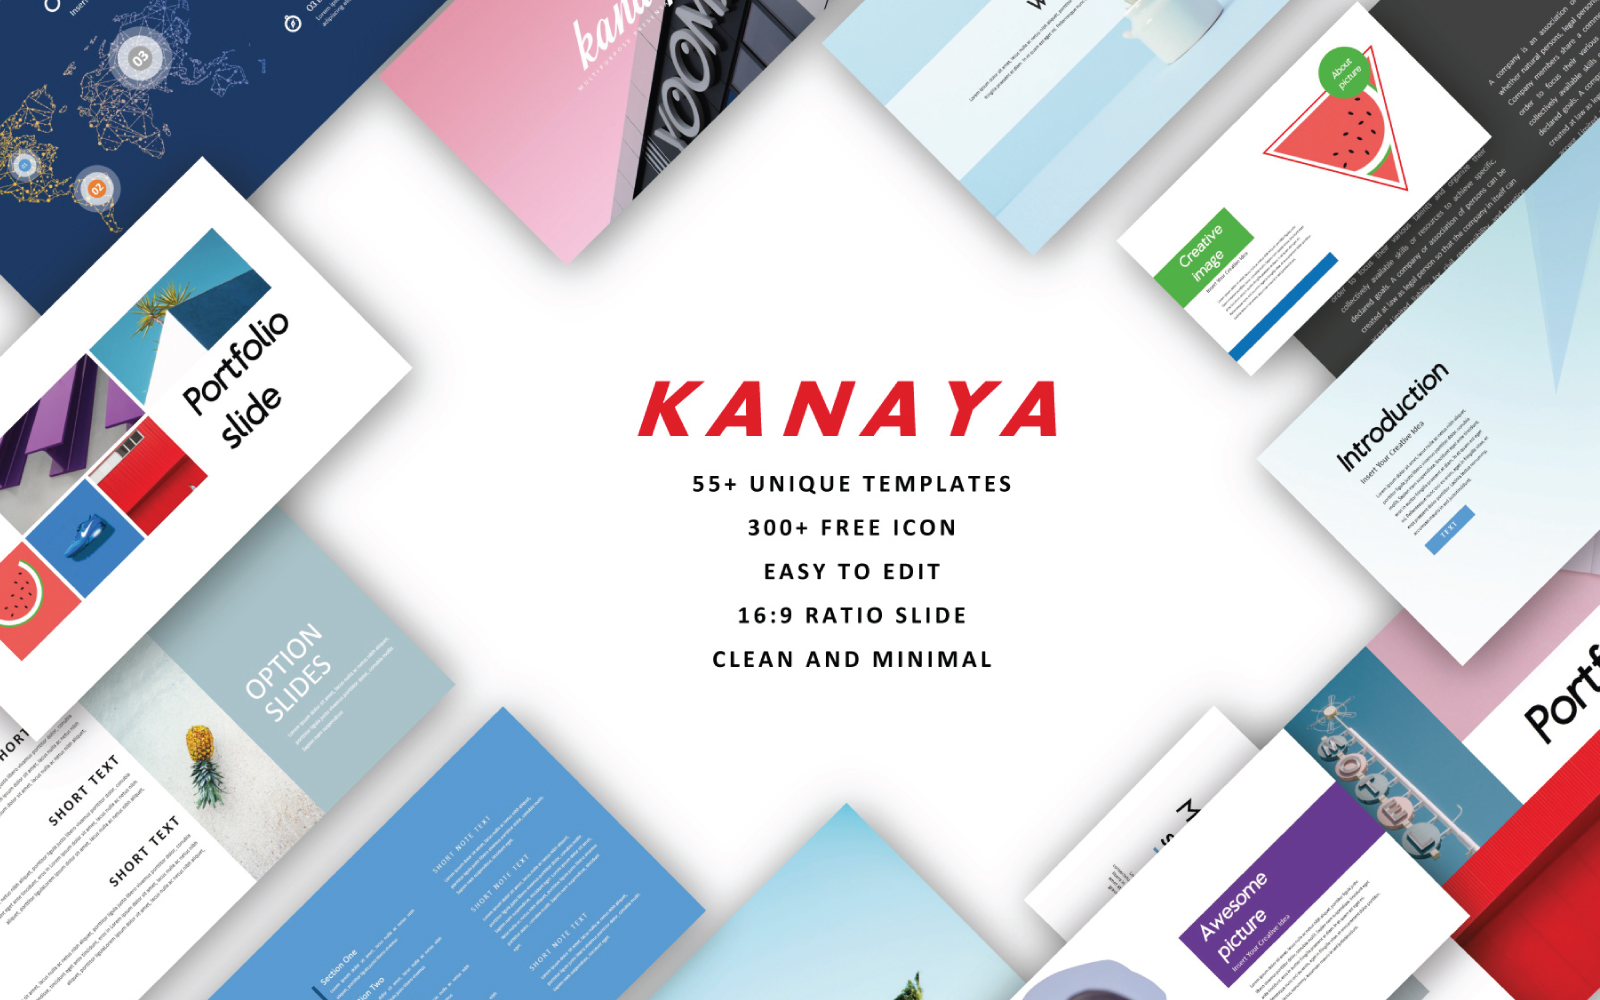 Kanaya - Keynote Template